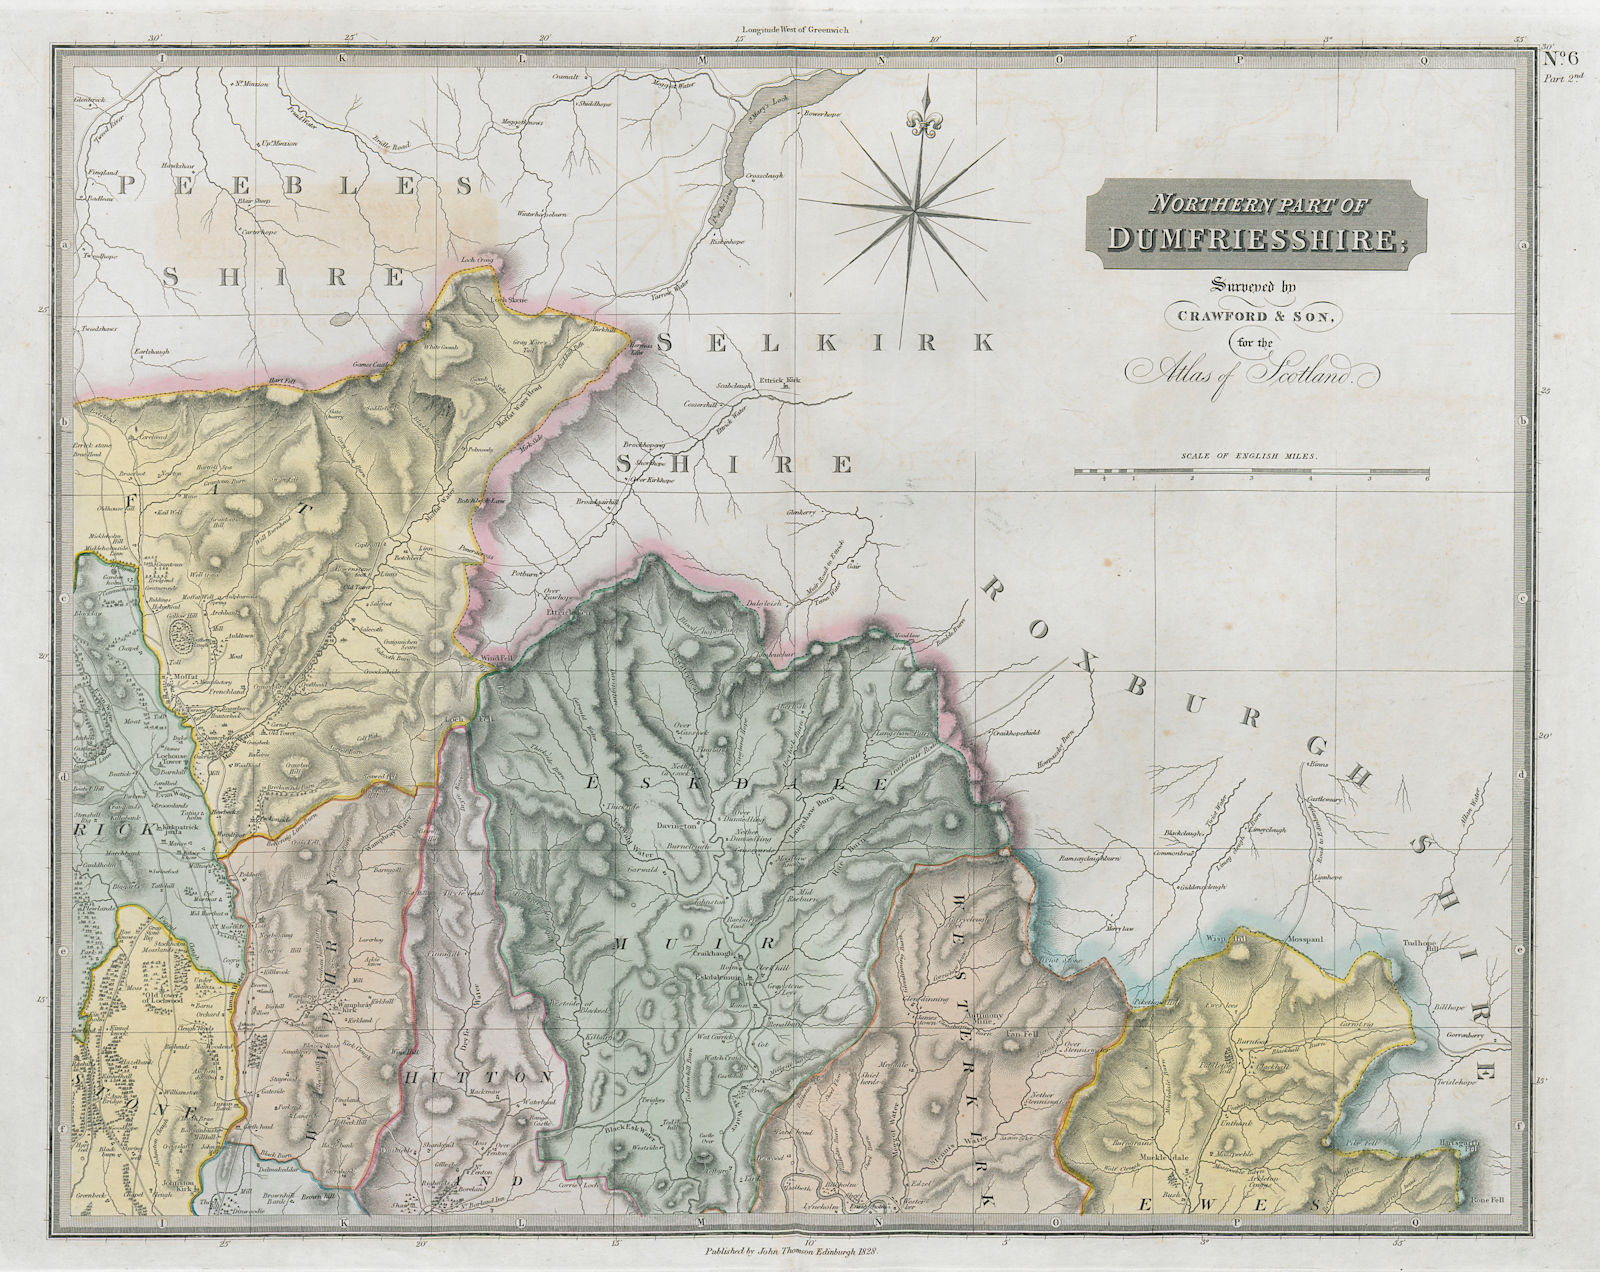 Associate Product Dumfrieshire north-east sheet. Moffat Ettrick Beattock. THOMSON 1832 old map